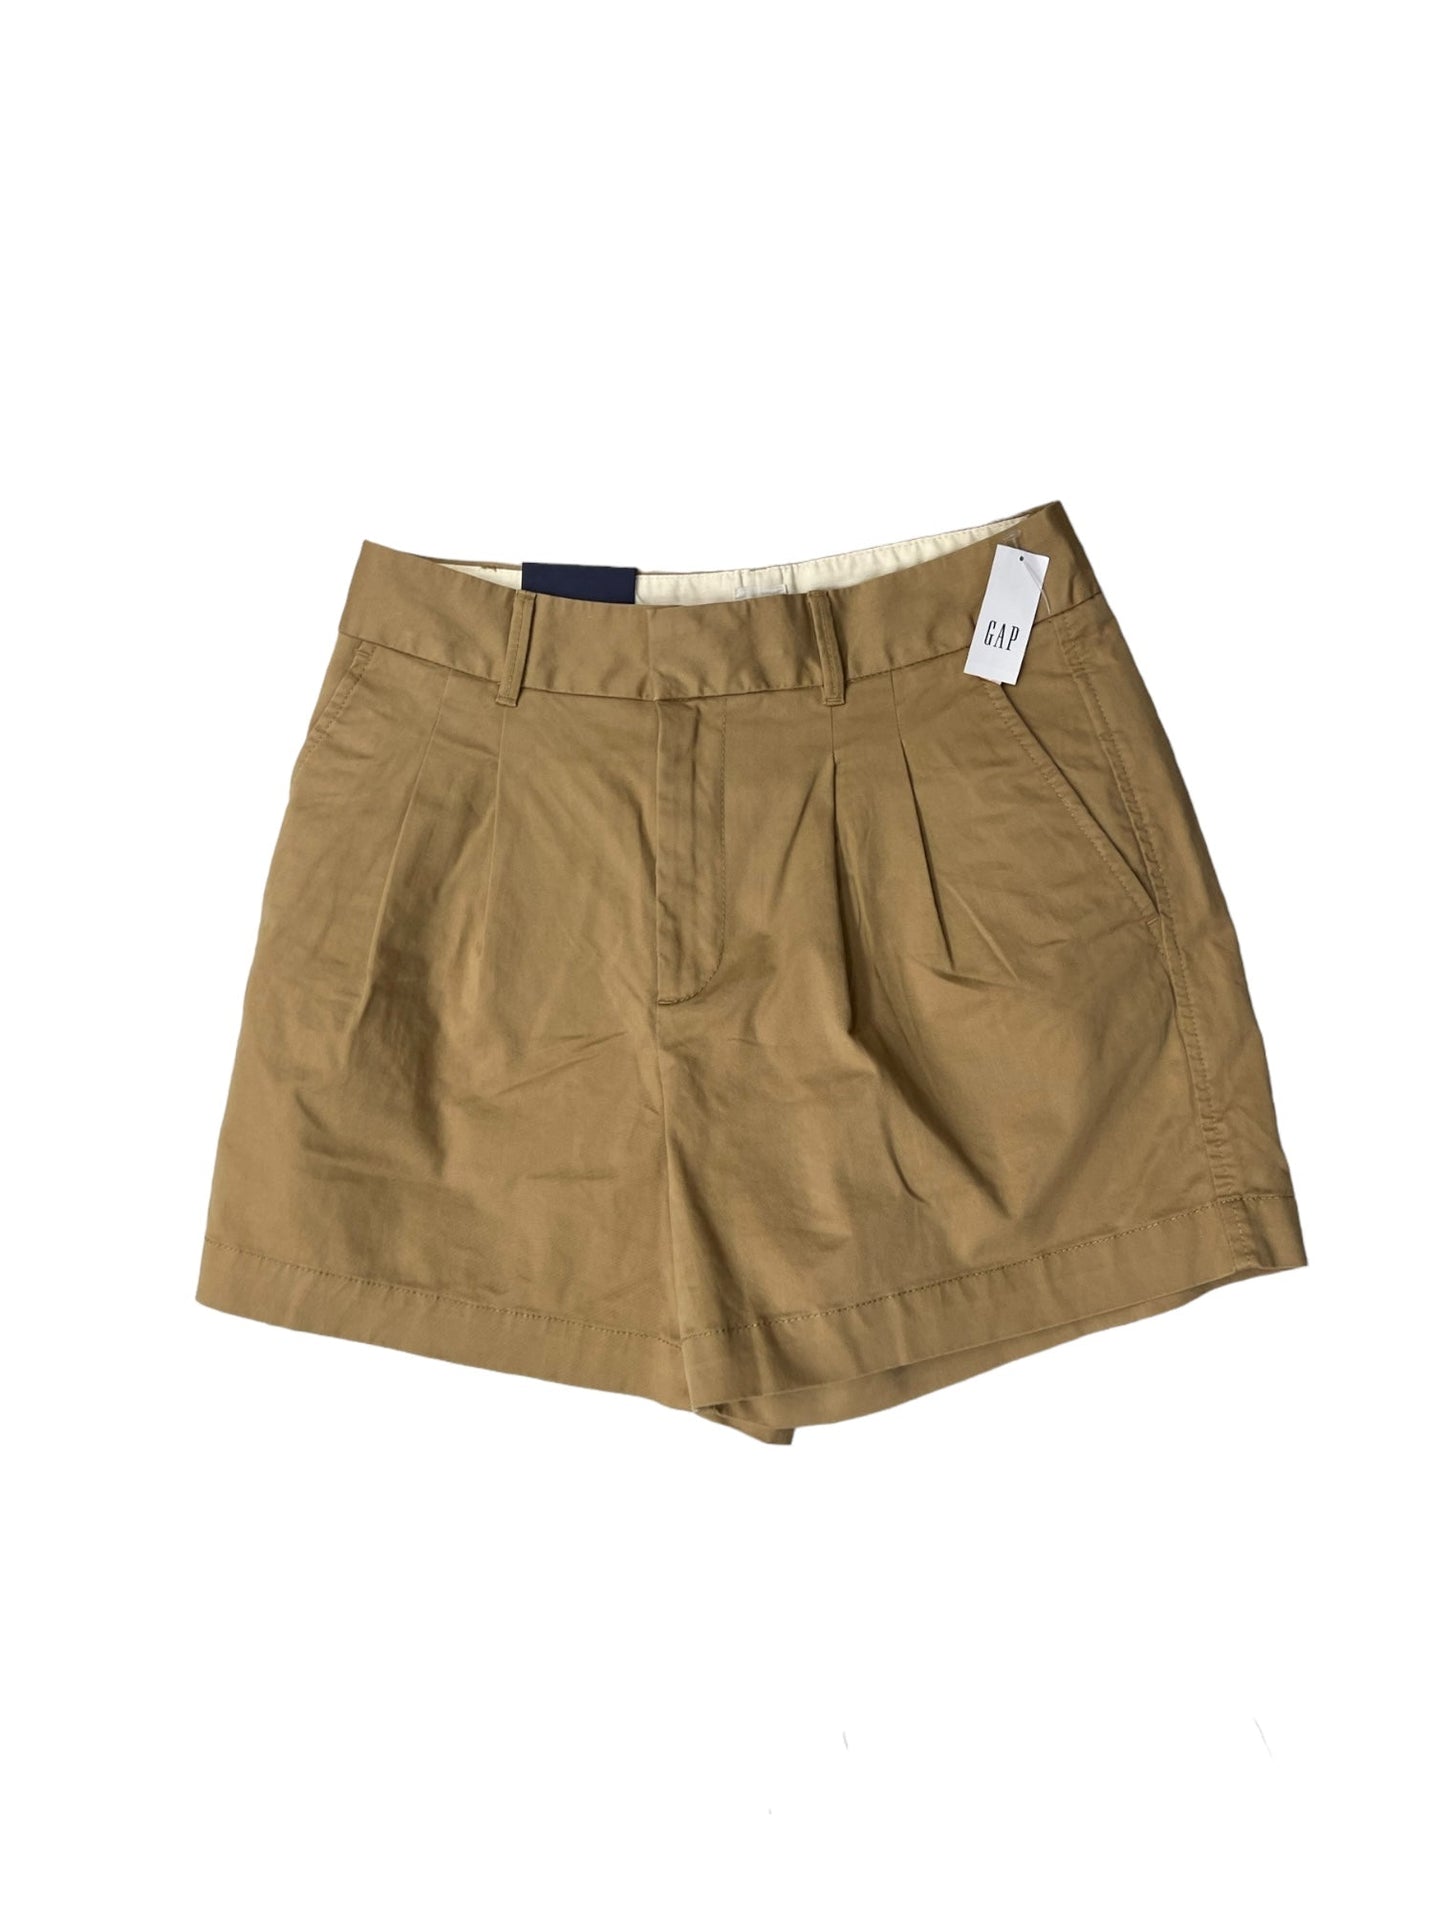 Brown Shorts Gap, Size 6